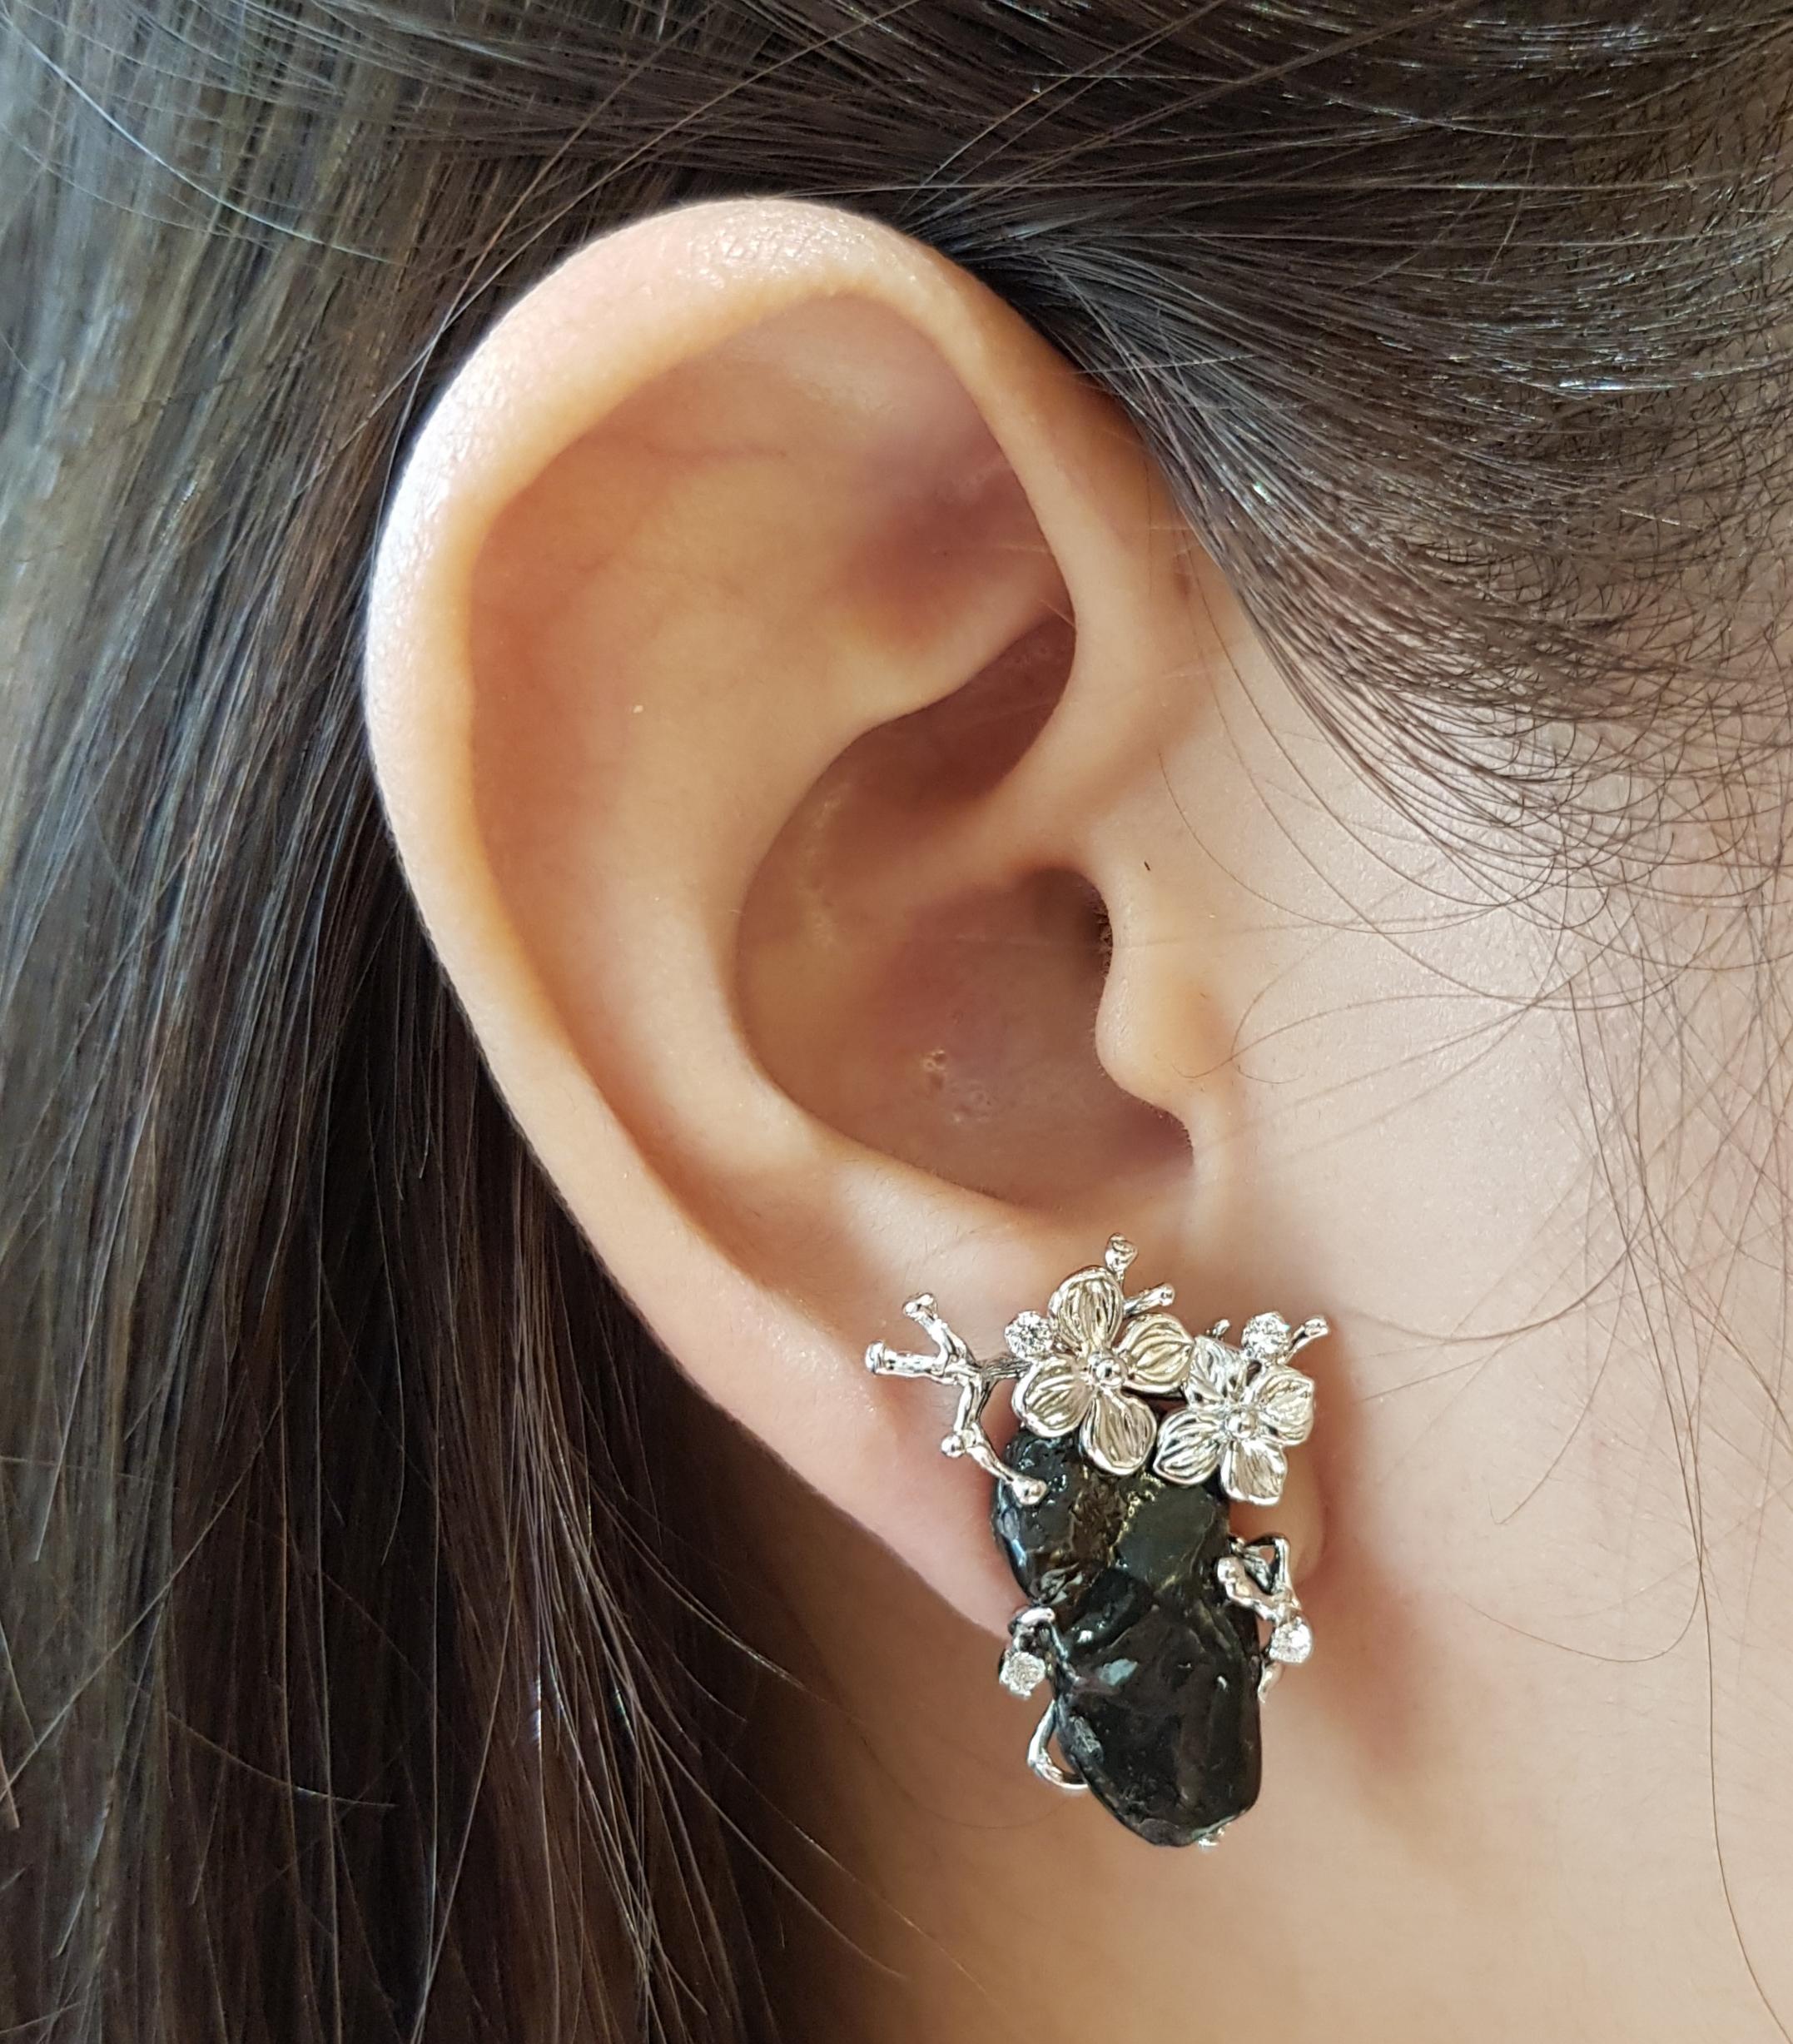 Meteorite 16.66 carats with Diamond 0.17 carat Earrings set in 18 Karat White Gold Settings

Width:  2.0 cm 
Length: 2.8 cm
Total Weight: 11.6 grams

